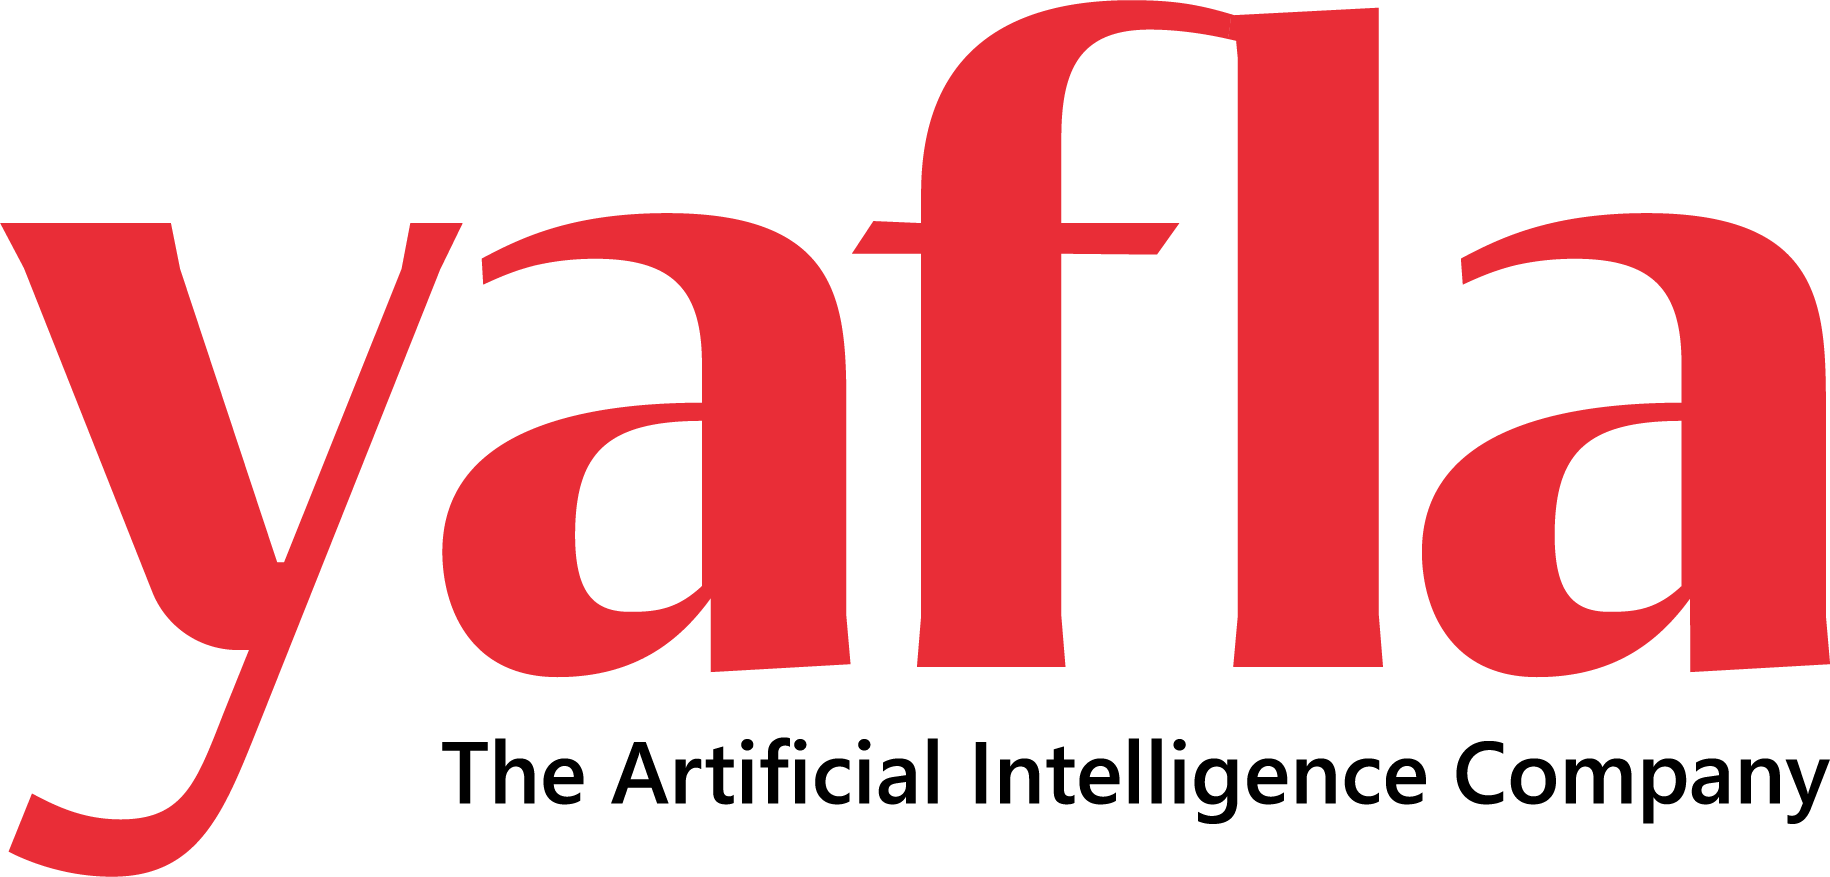 yafla - The Artificial Intelligence Company